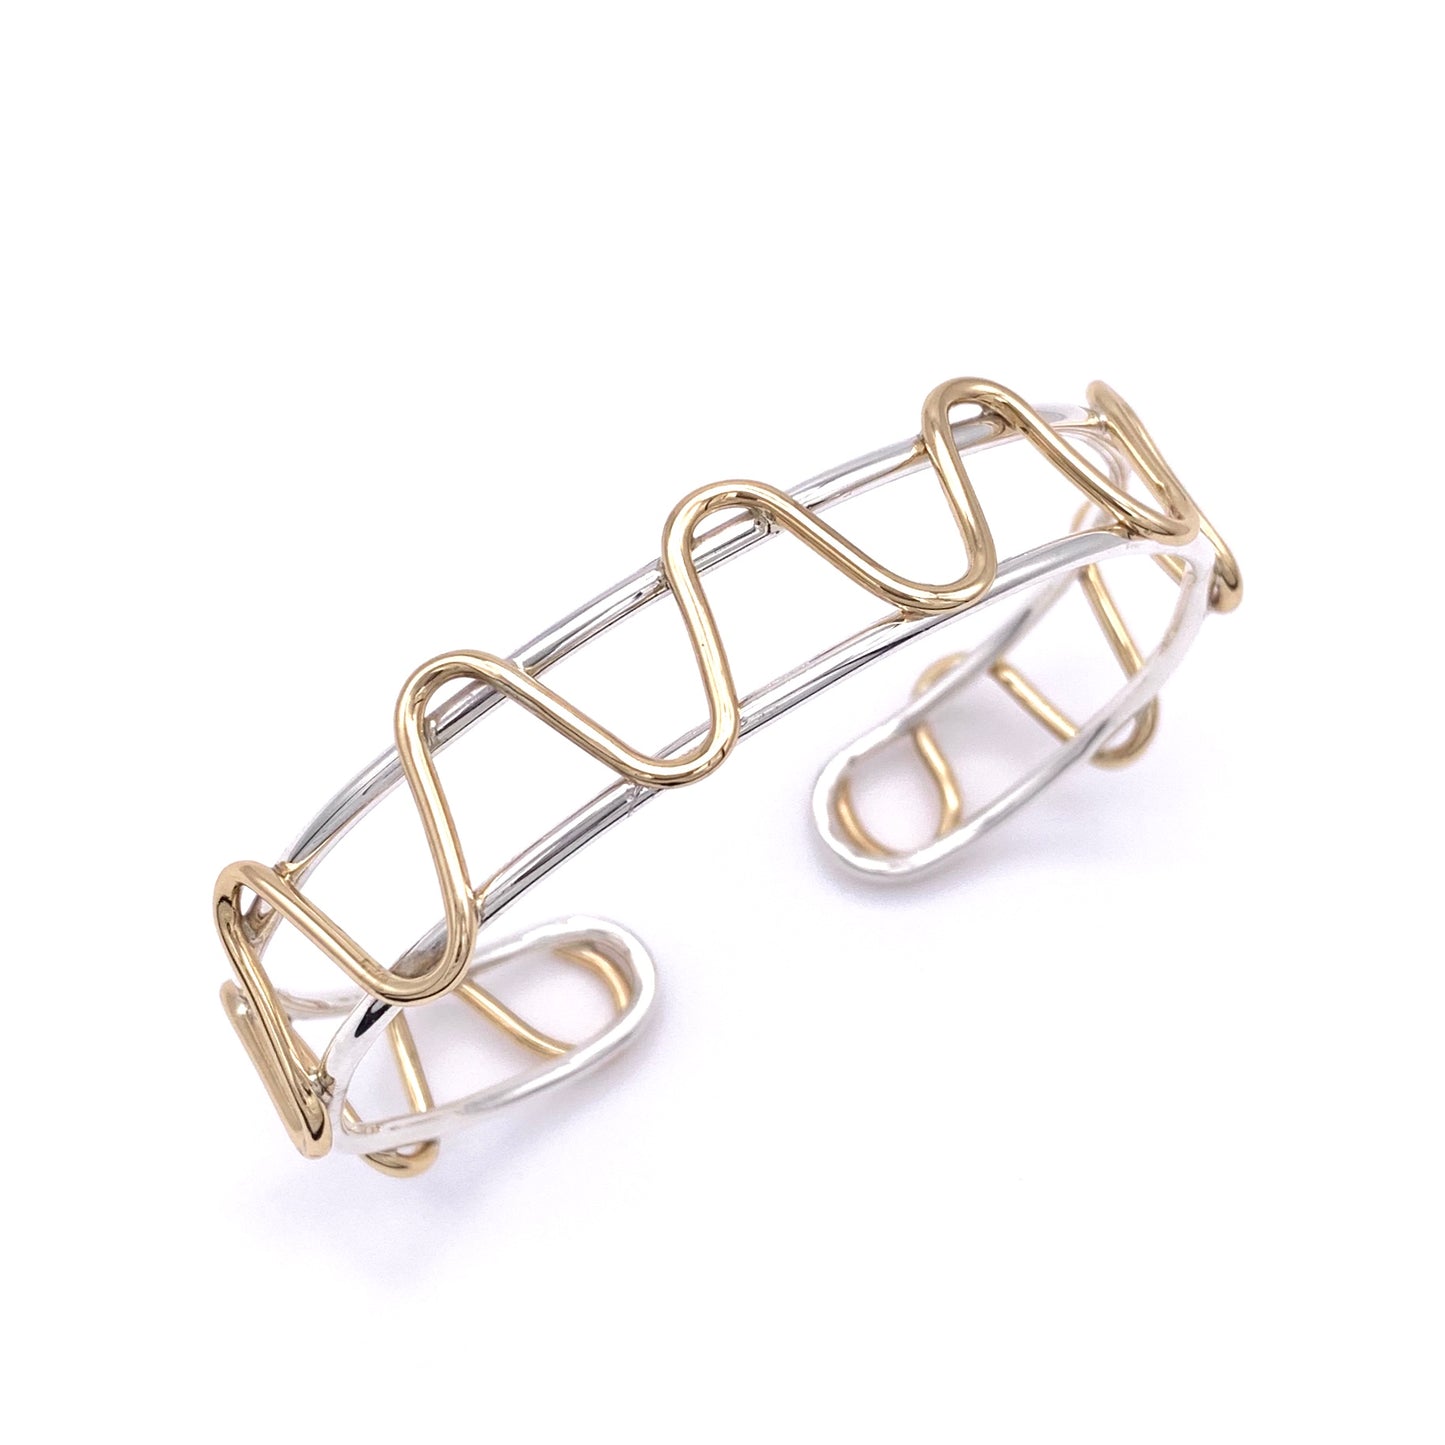 Ribbon of Brass Silver Cuff Bracelet